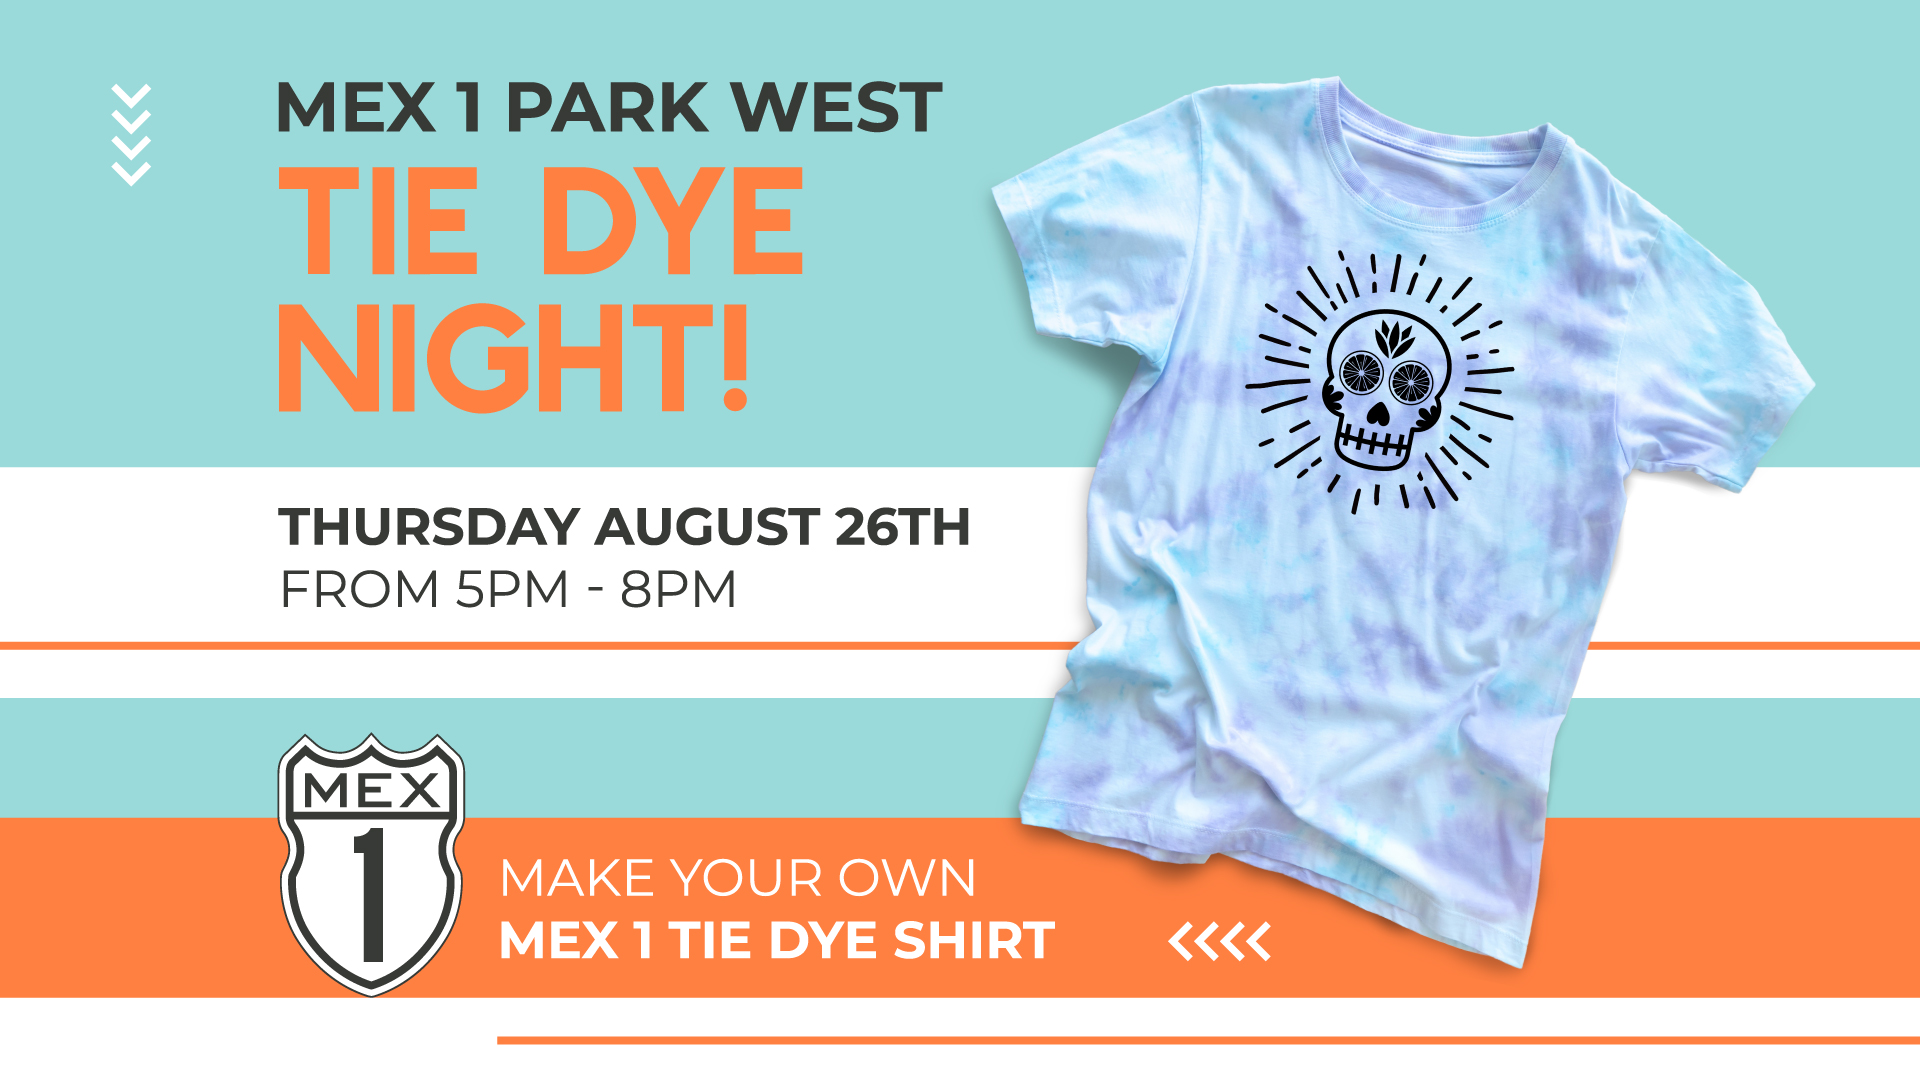 Tie Dye Night at Mex 1 Park West